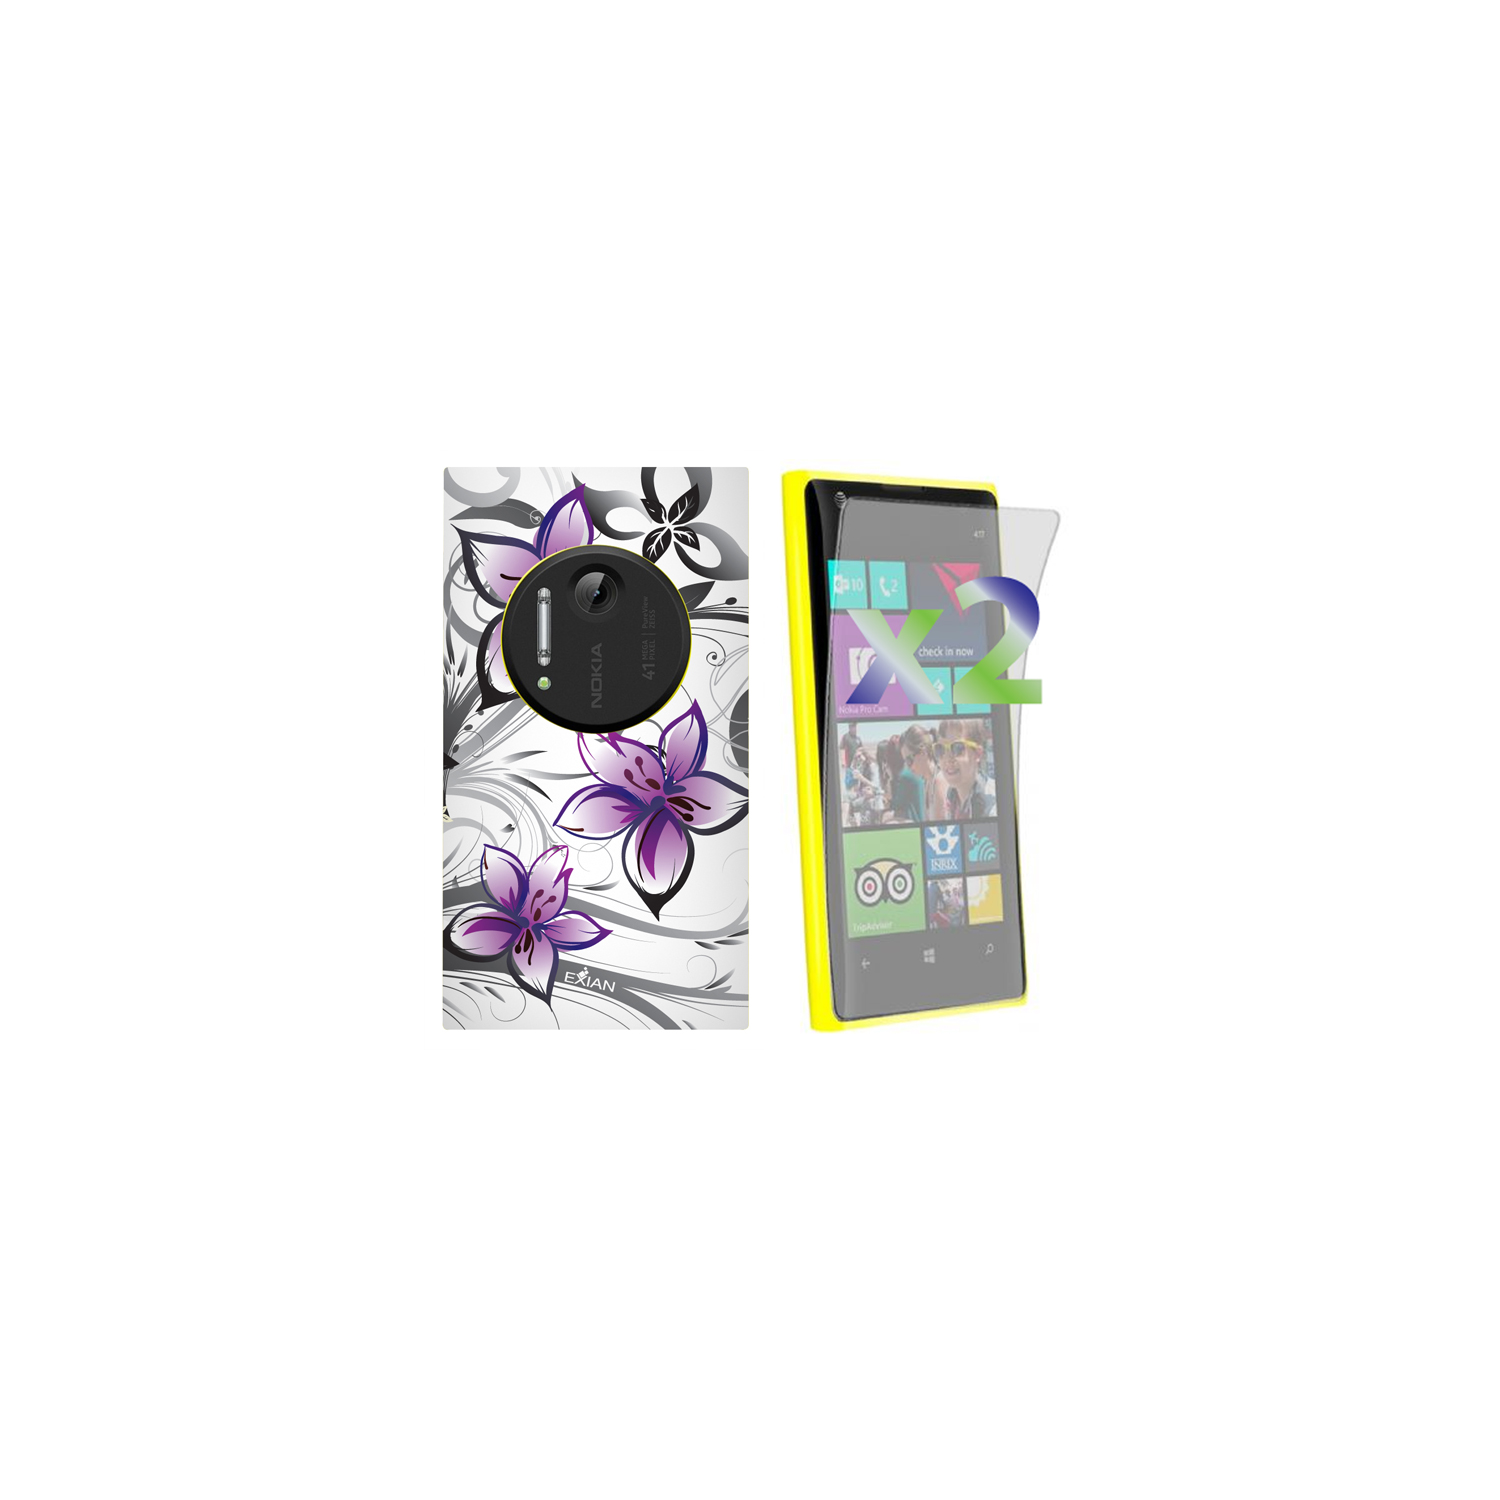 Exian Nokia Lumia 1020 Screen Protectors X 2 and TPU Case Exian Design Purple Floral on White